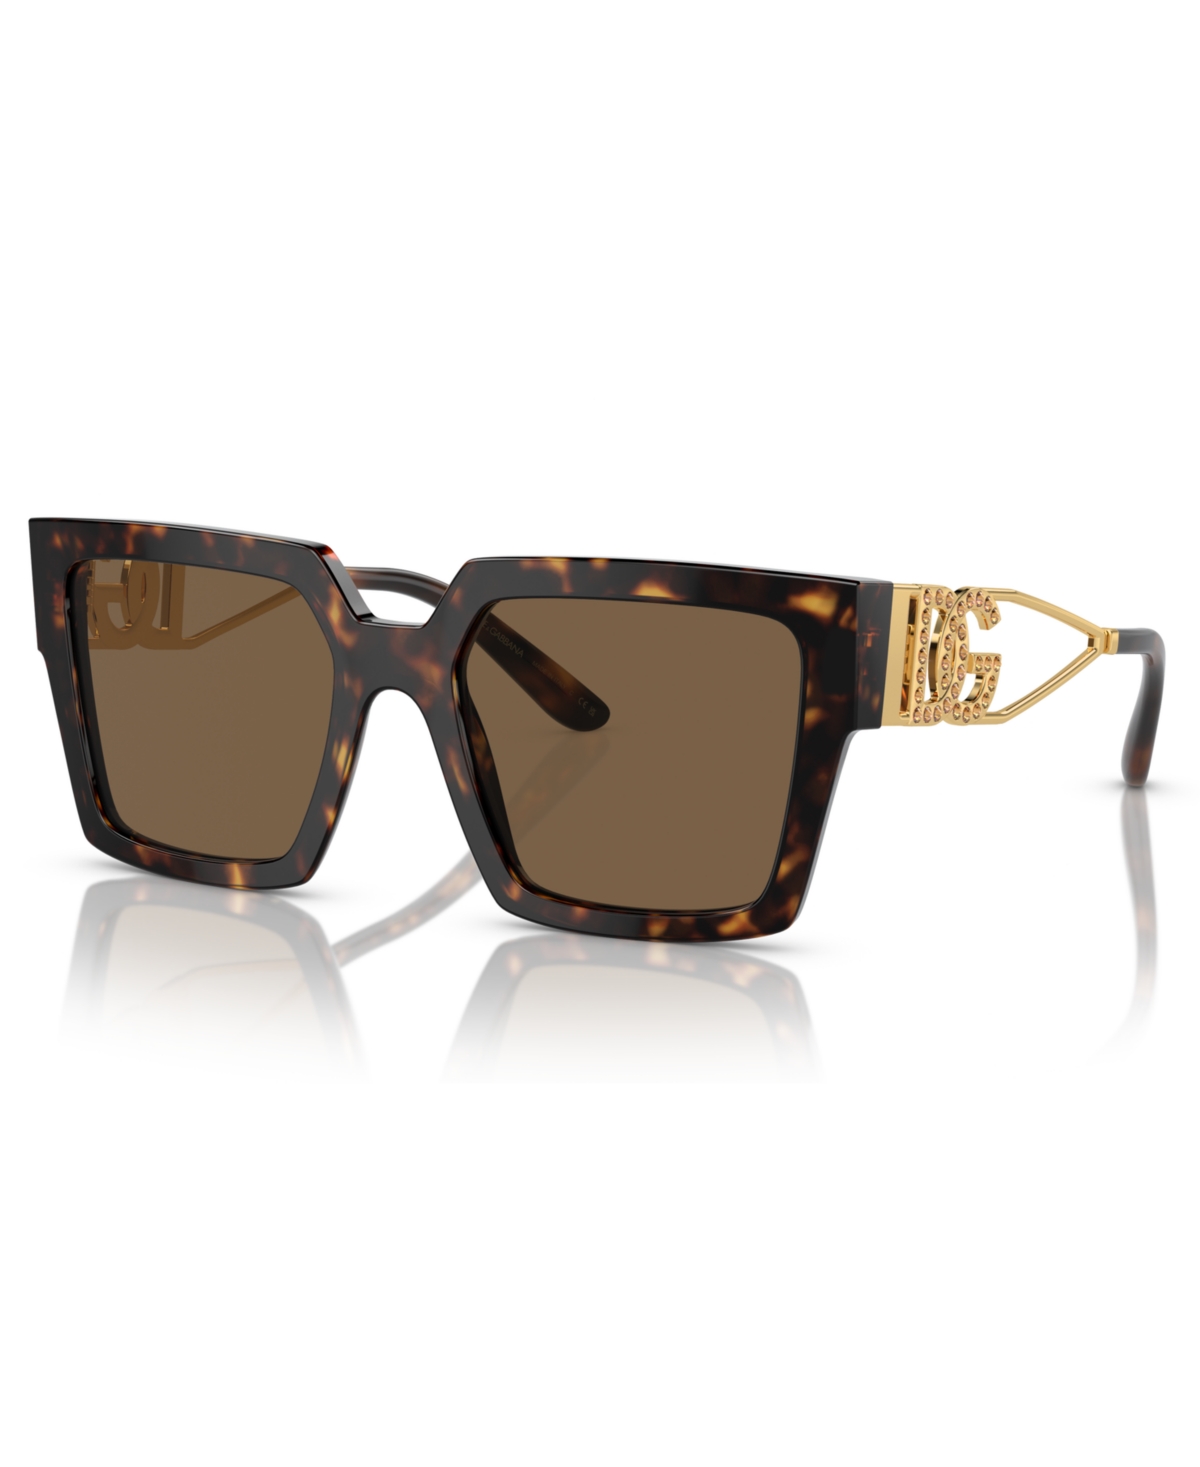 Dolce&Gabbana Women's Sunglasses DG4446B - Havana